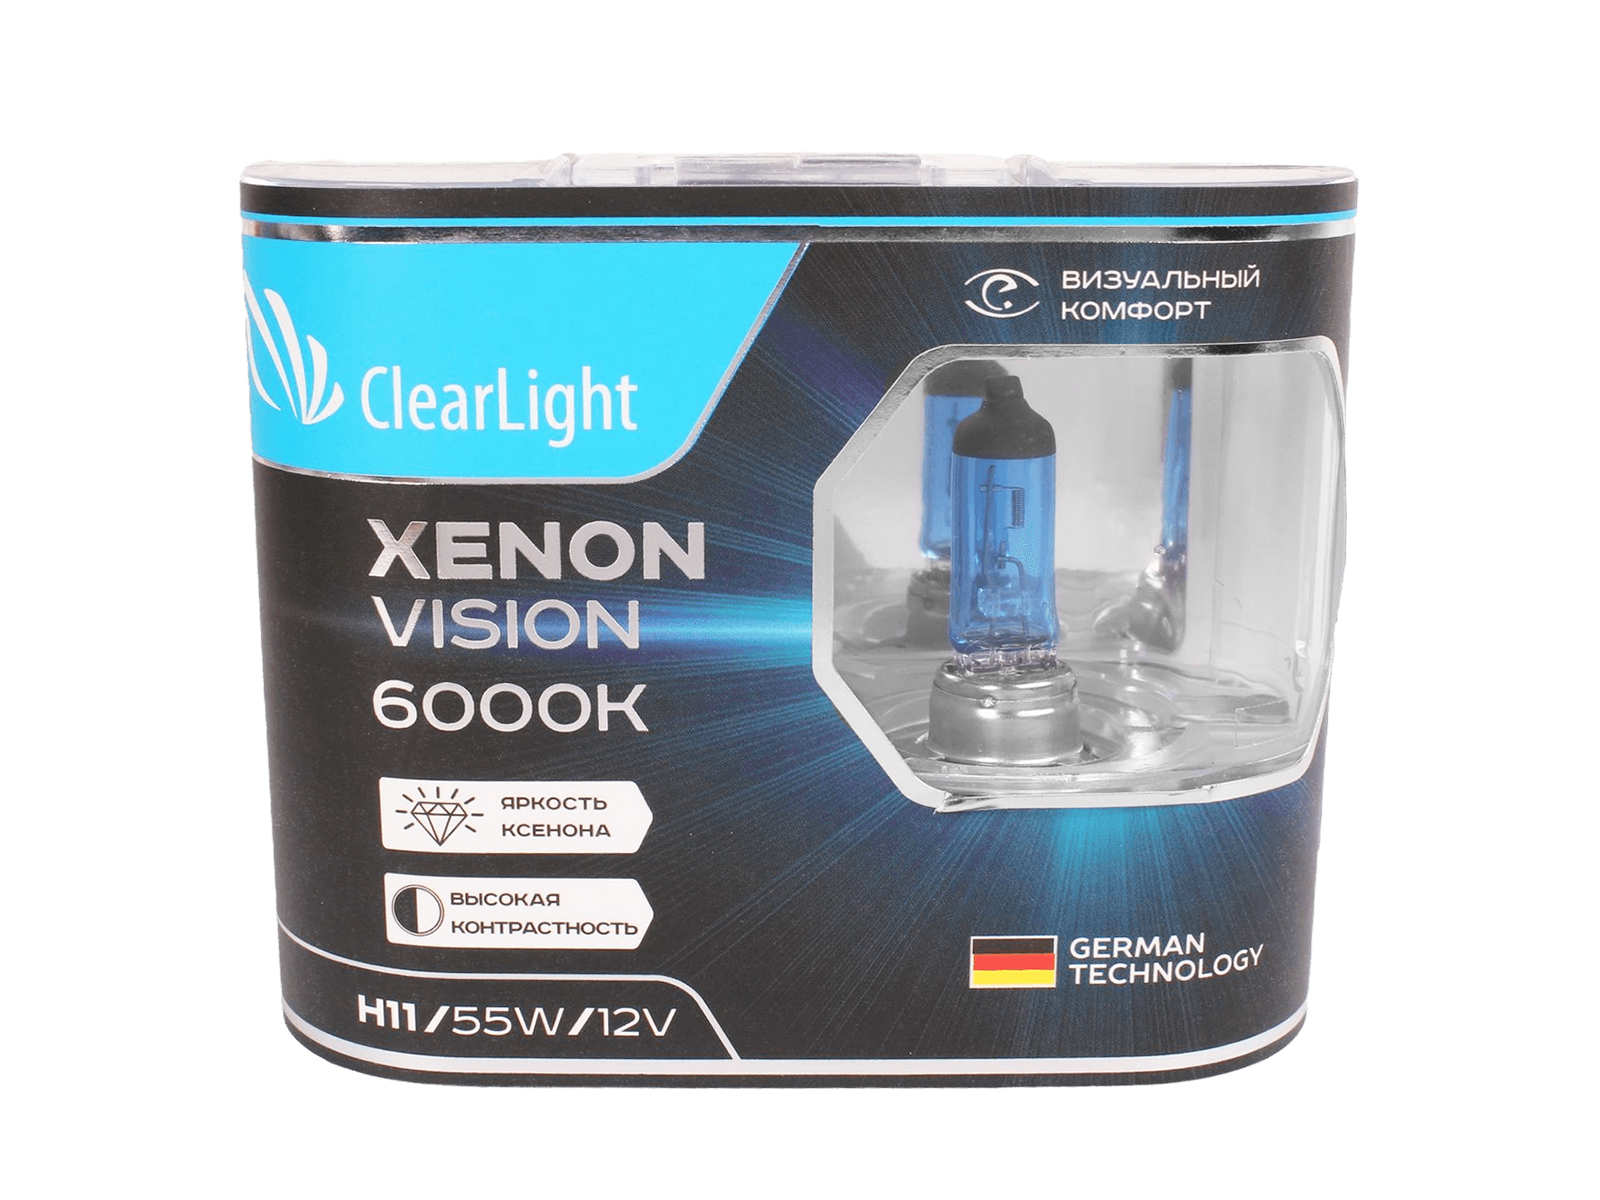 Лампа Clearlight H11 12V 55W Xenon Vision комплект фотография №4